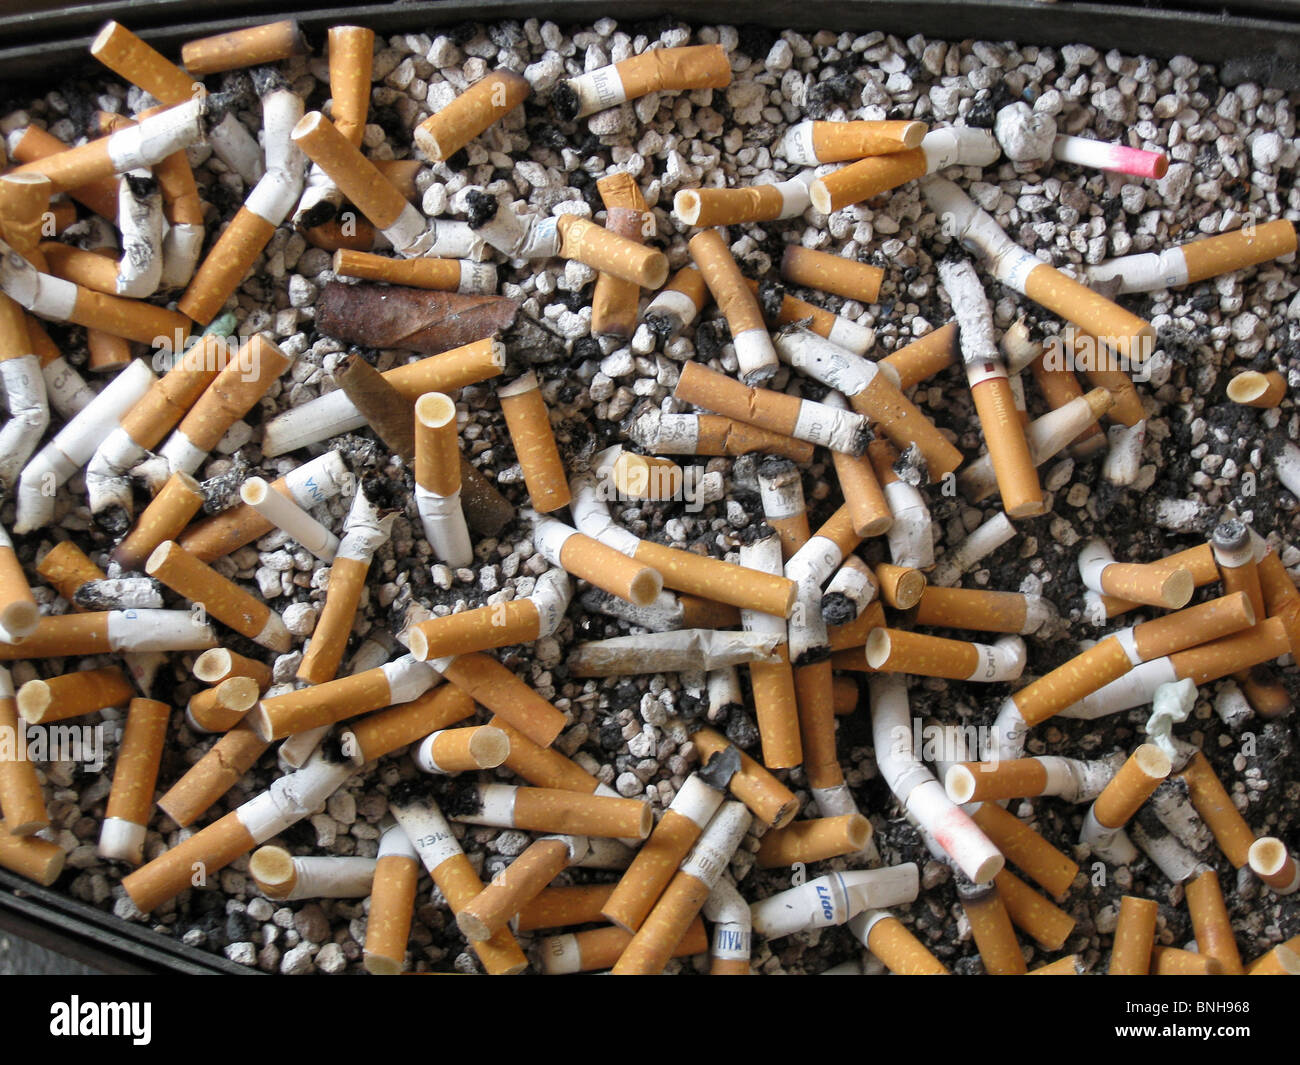 habit cigarette cigar butts ashtray smoking health hazard cigarettes Stock Photo